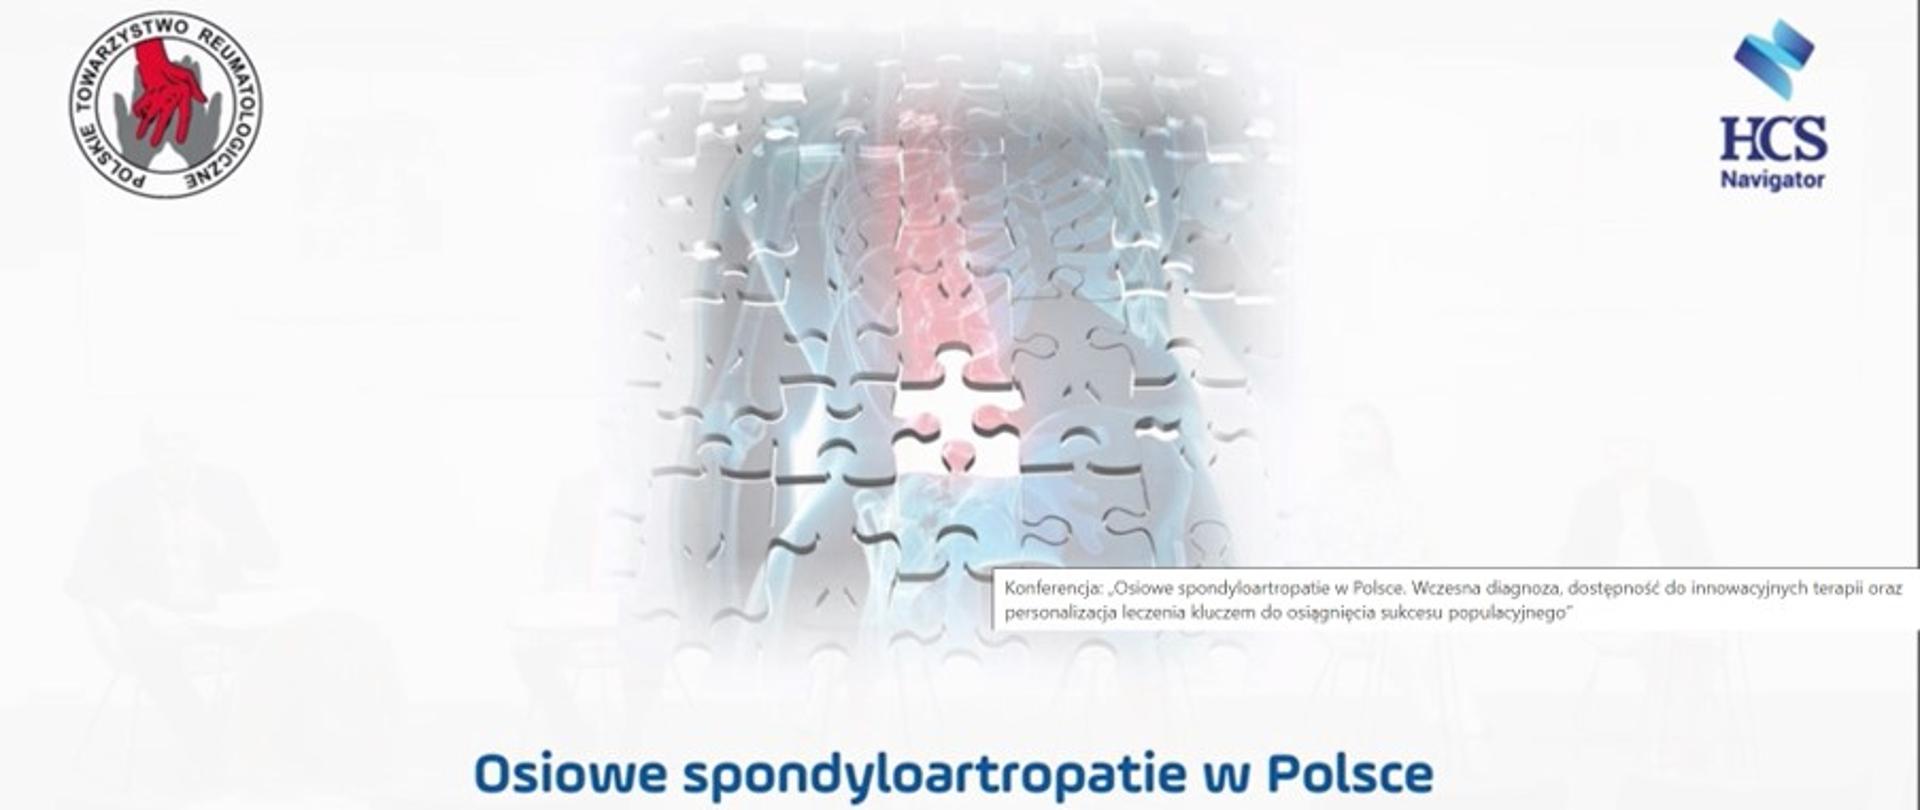 Osiowe spondyloartropatie